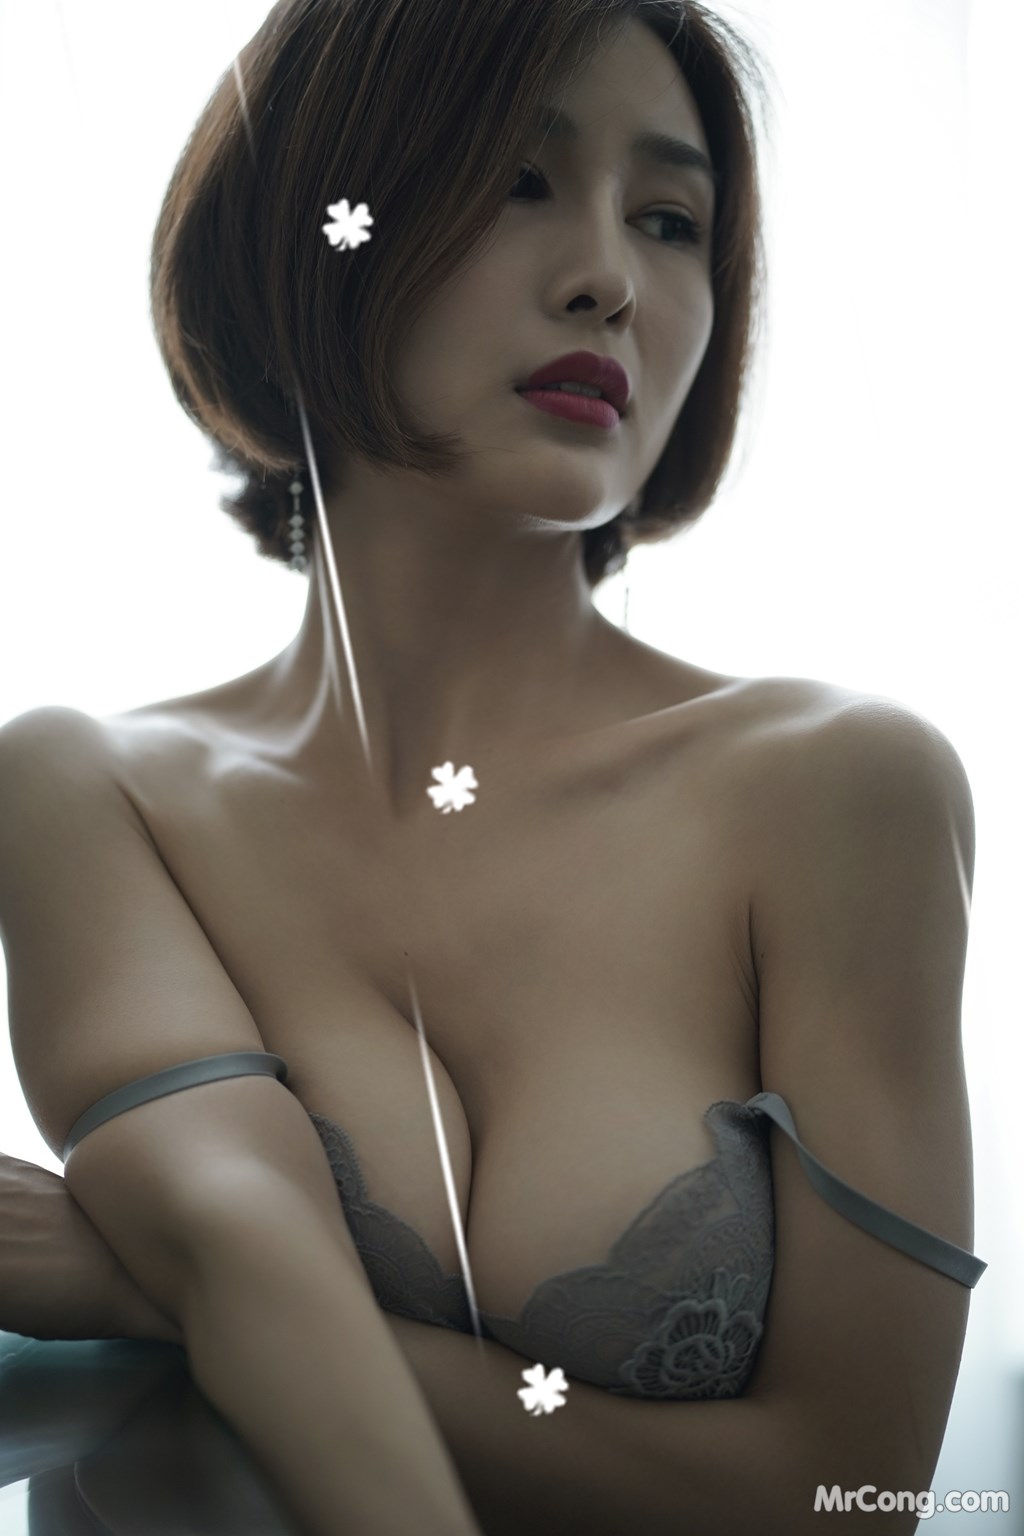 Yan Pan Pan (闫 盼盼) beauty poses super hot with underwear (58 photos)